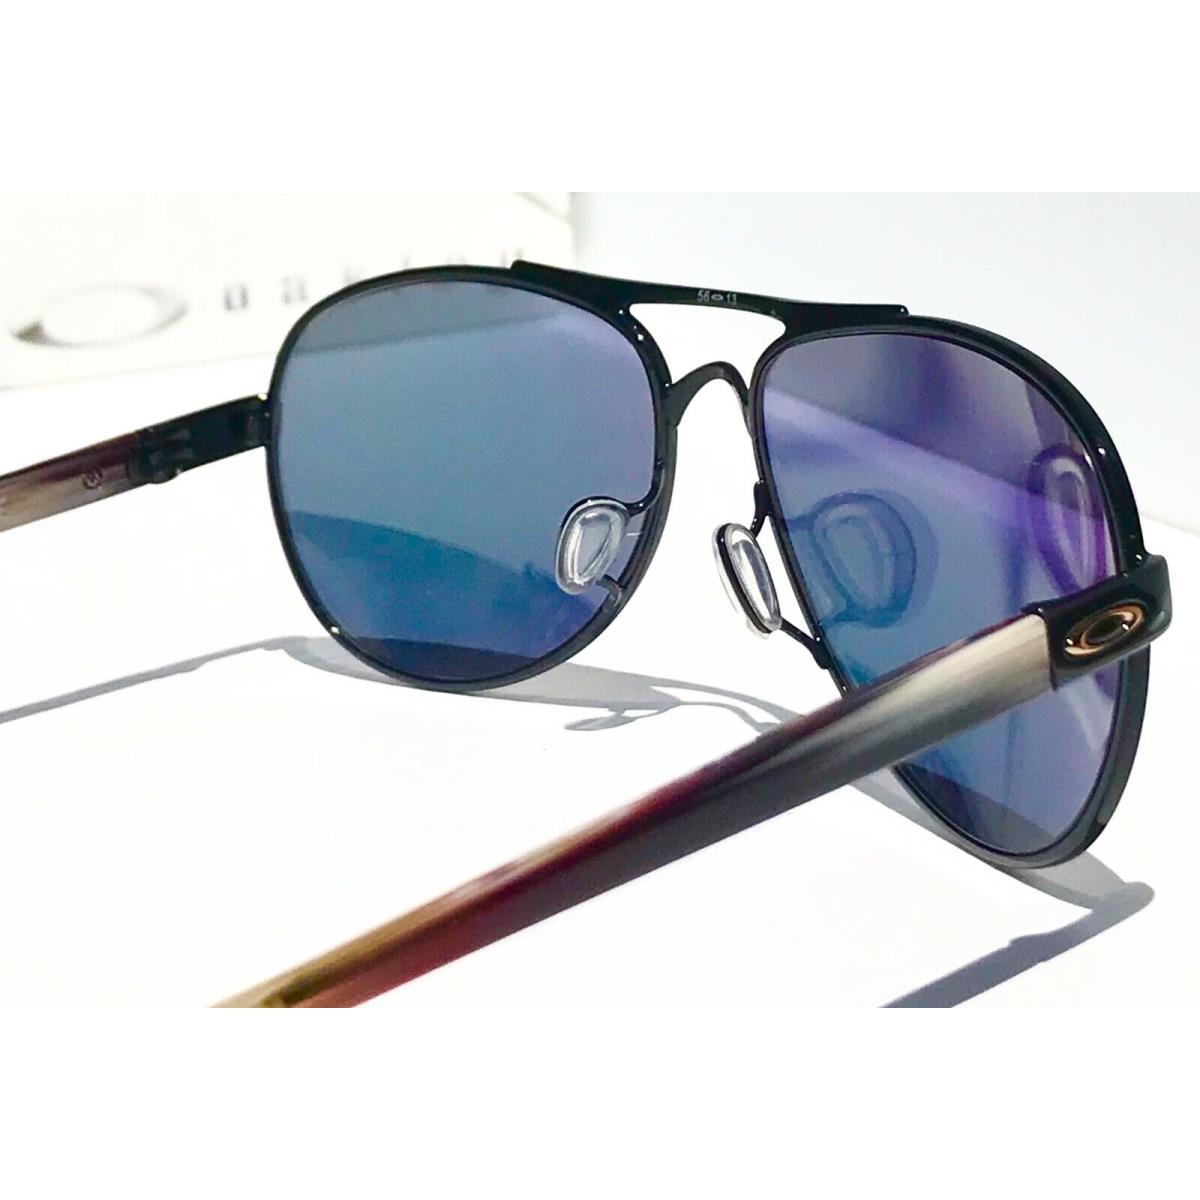 Oakley sunglasses Tie Breaker - Pink , Multicolor Frame, Pink Lens 5